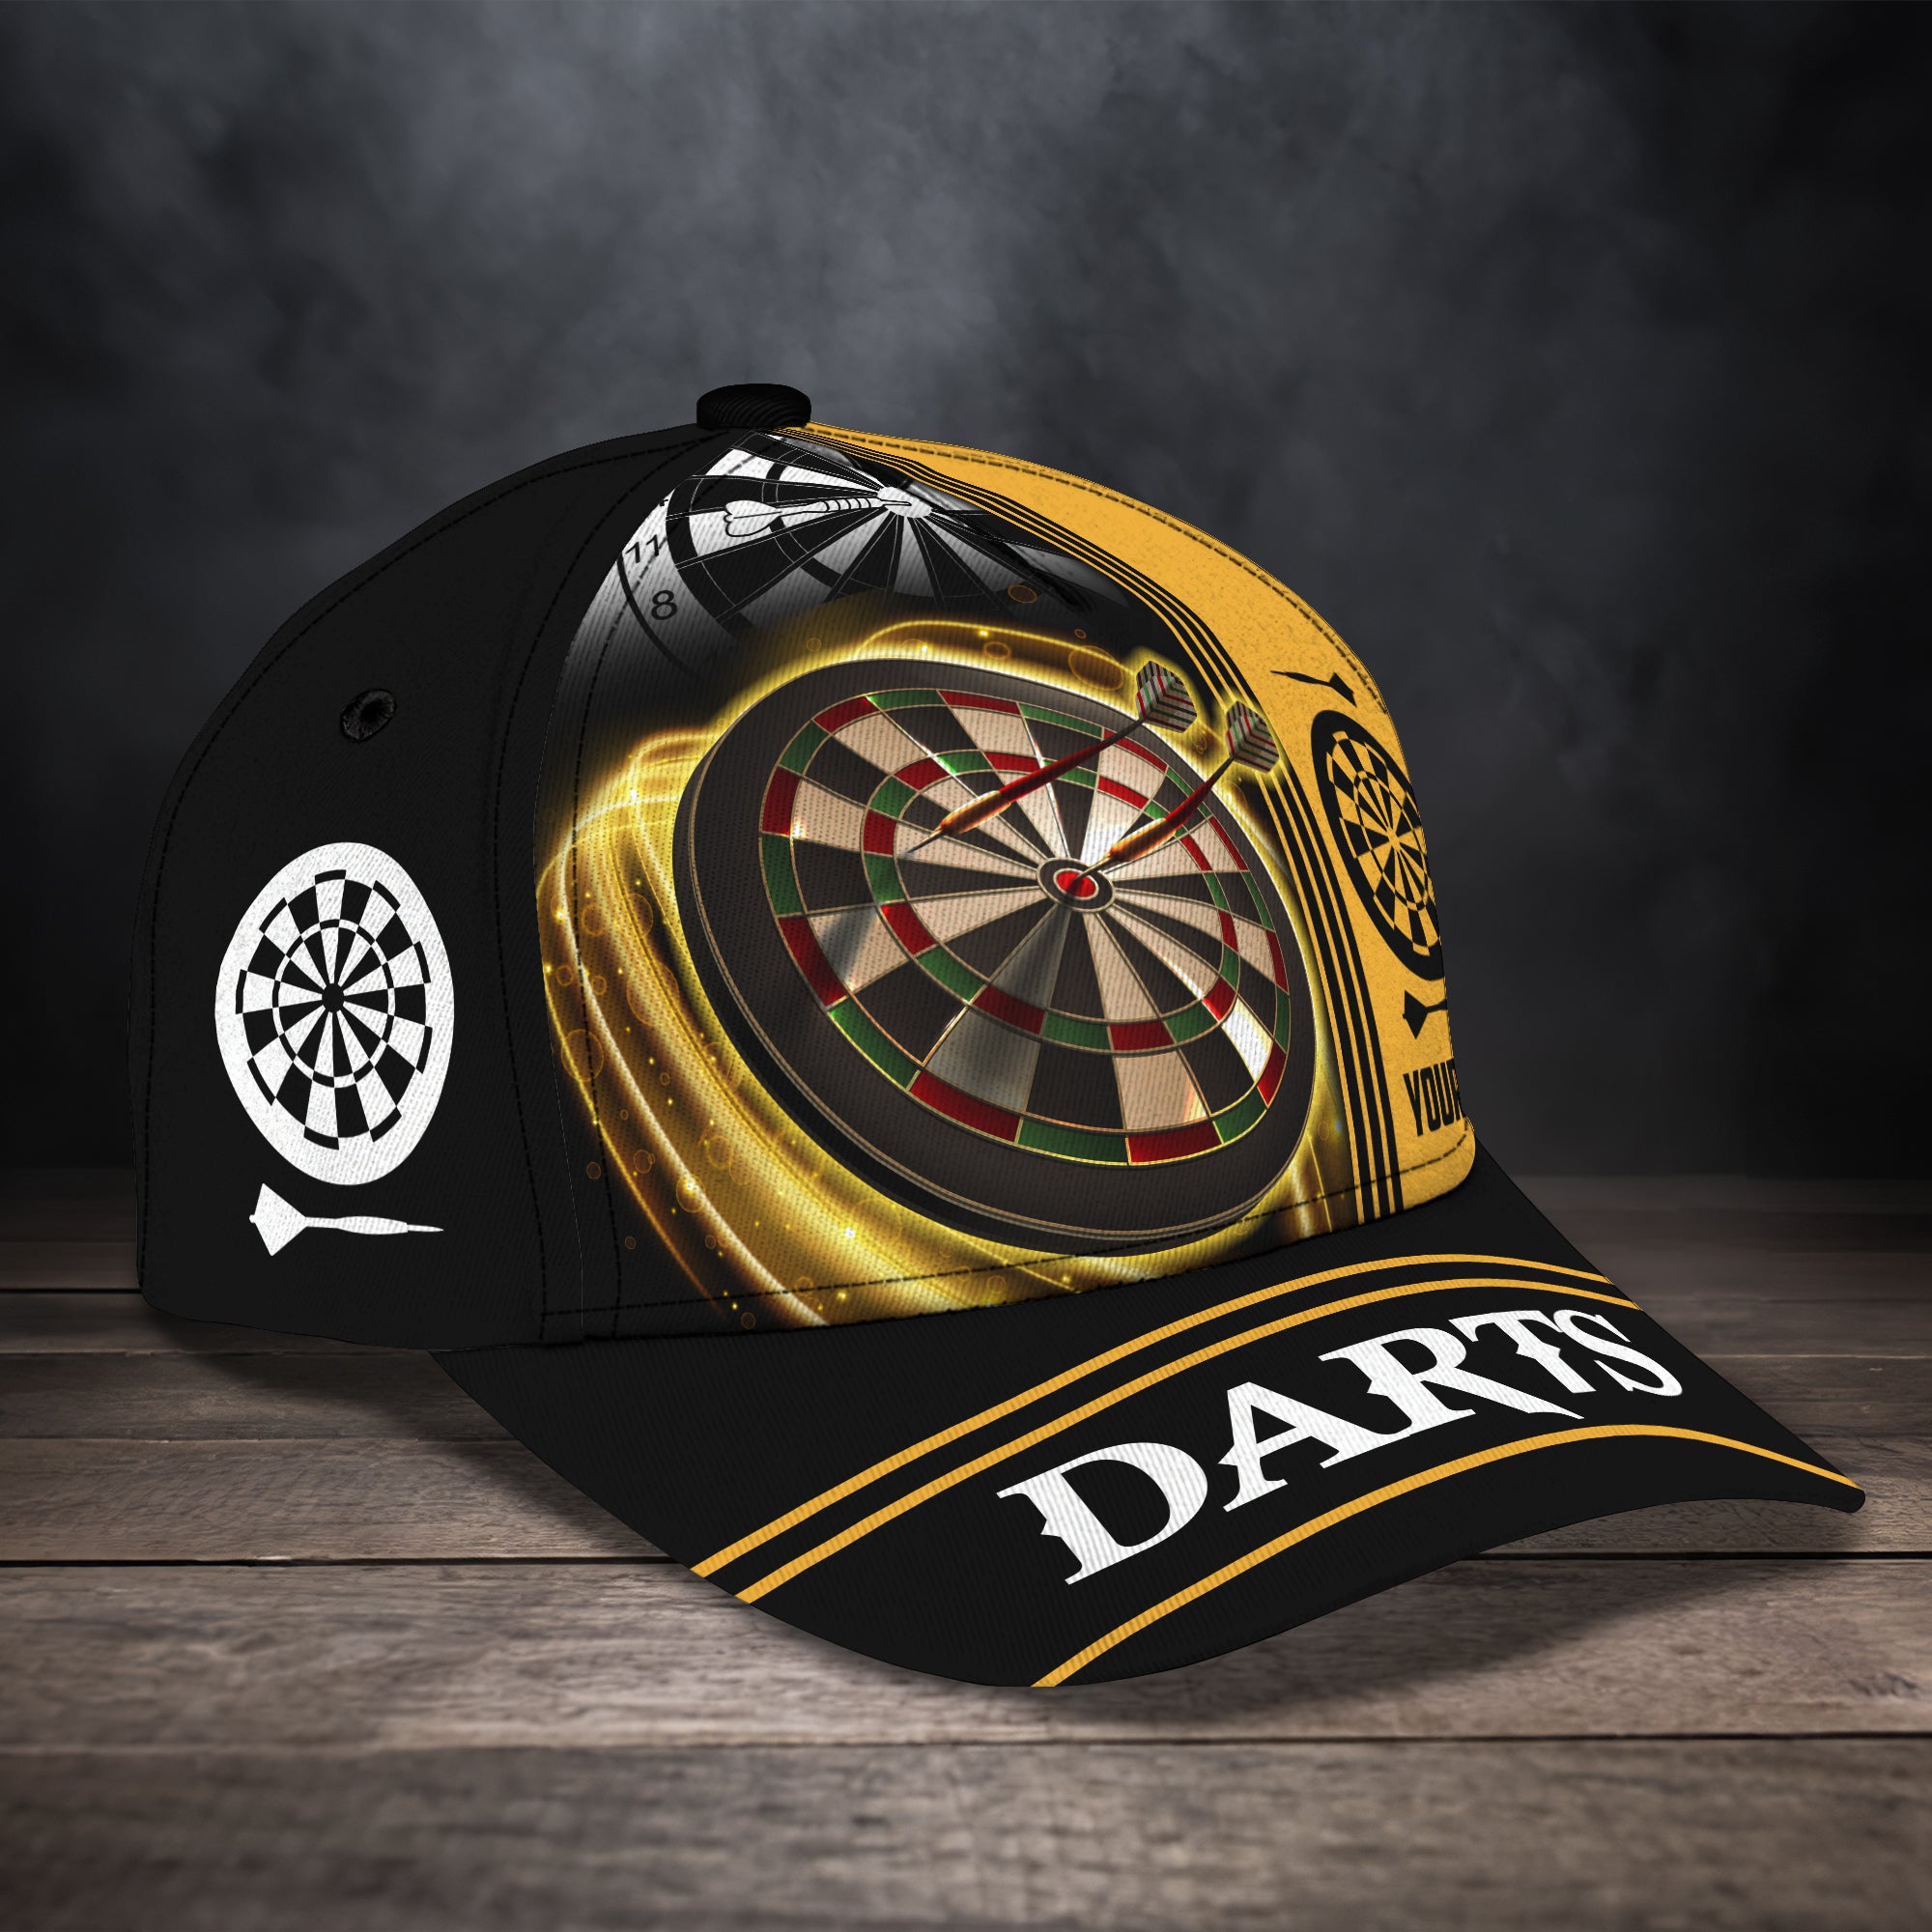 Darts 22 - Personalized Name Cap - Hadn